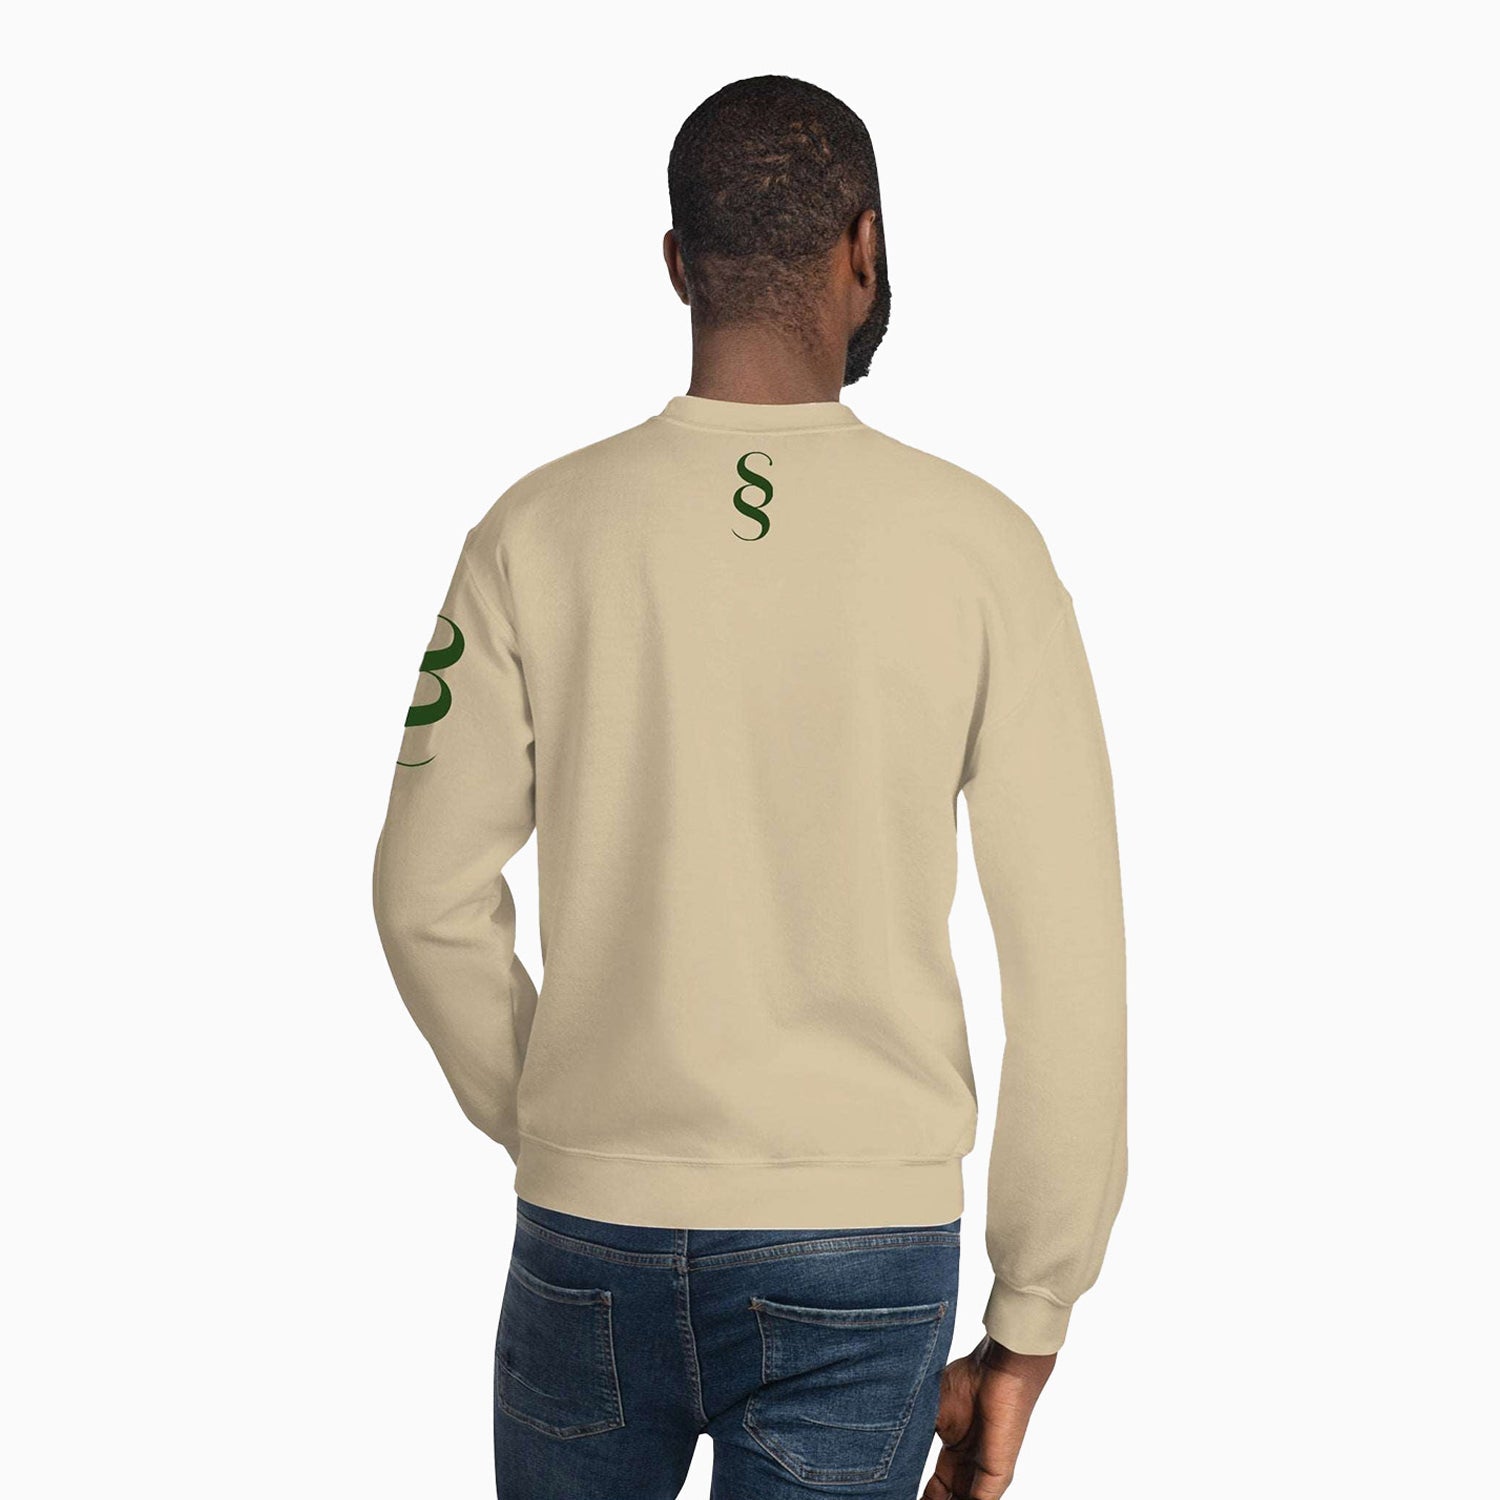 grenade-design-printed-crew-neck-khaki-sweatshirt-for-men-sc102-325